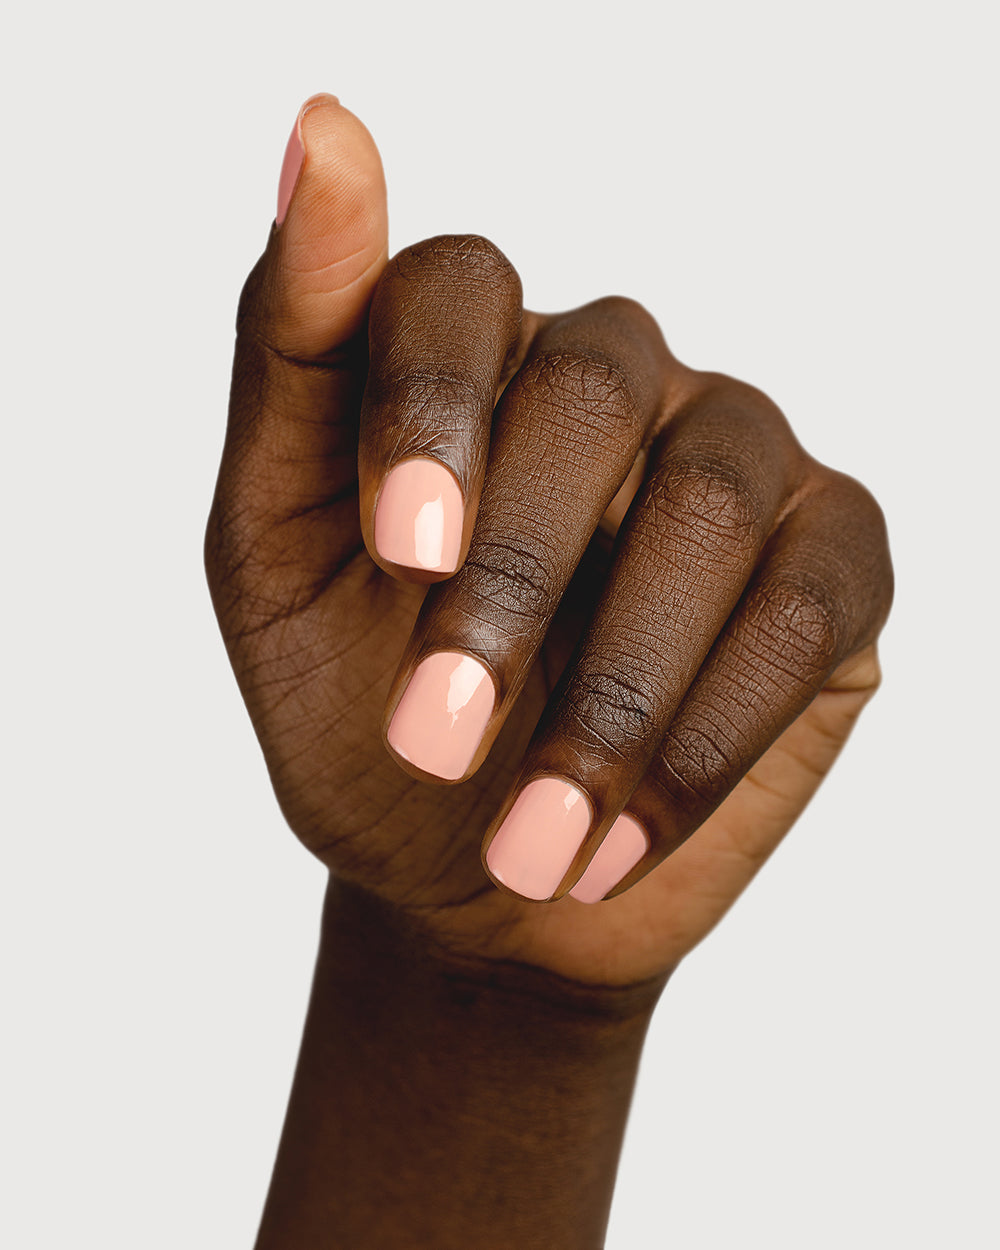 nude pink nail polish hand swatch on dark skin tone